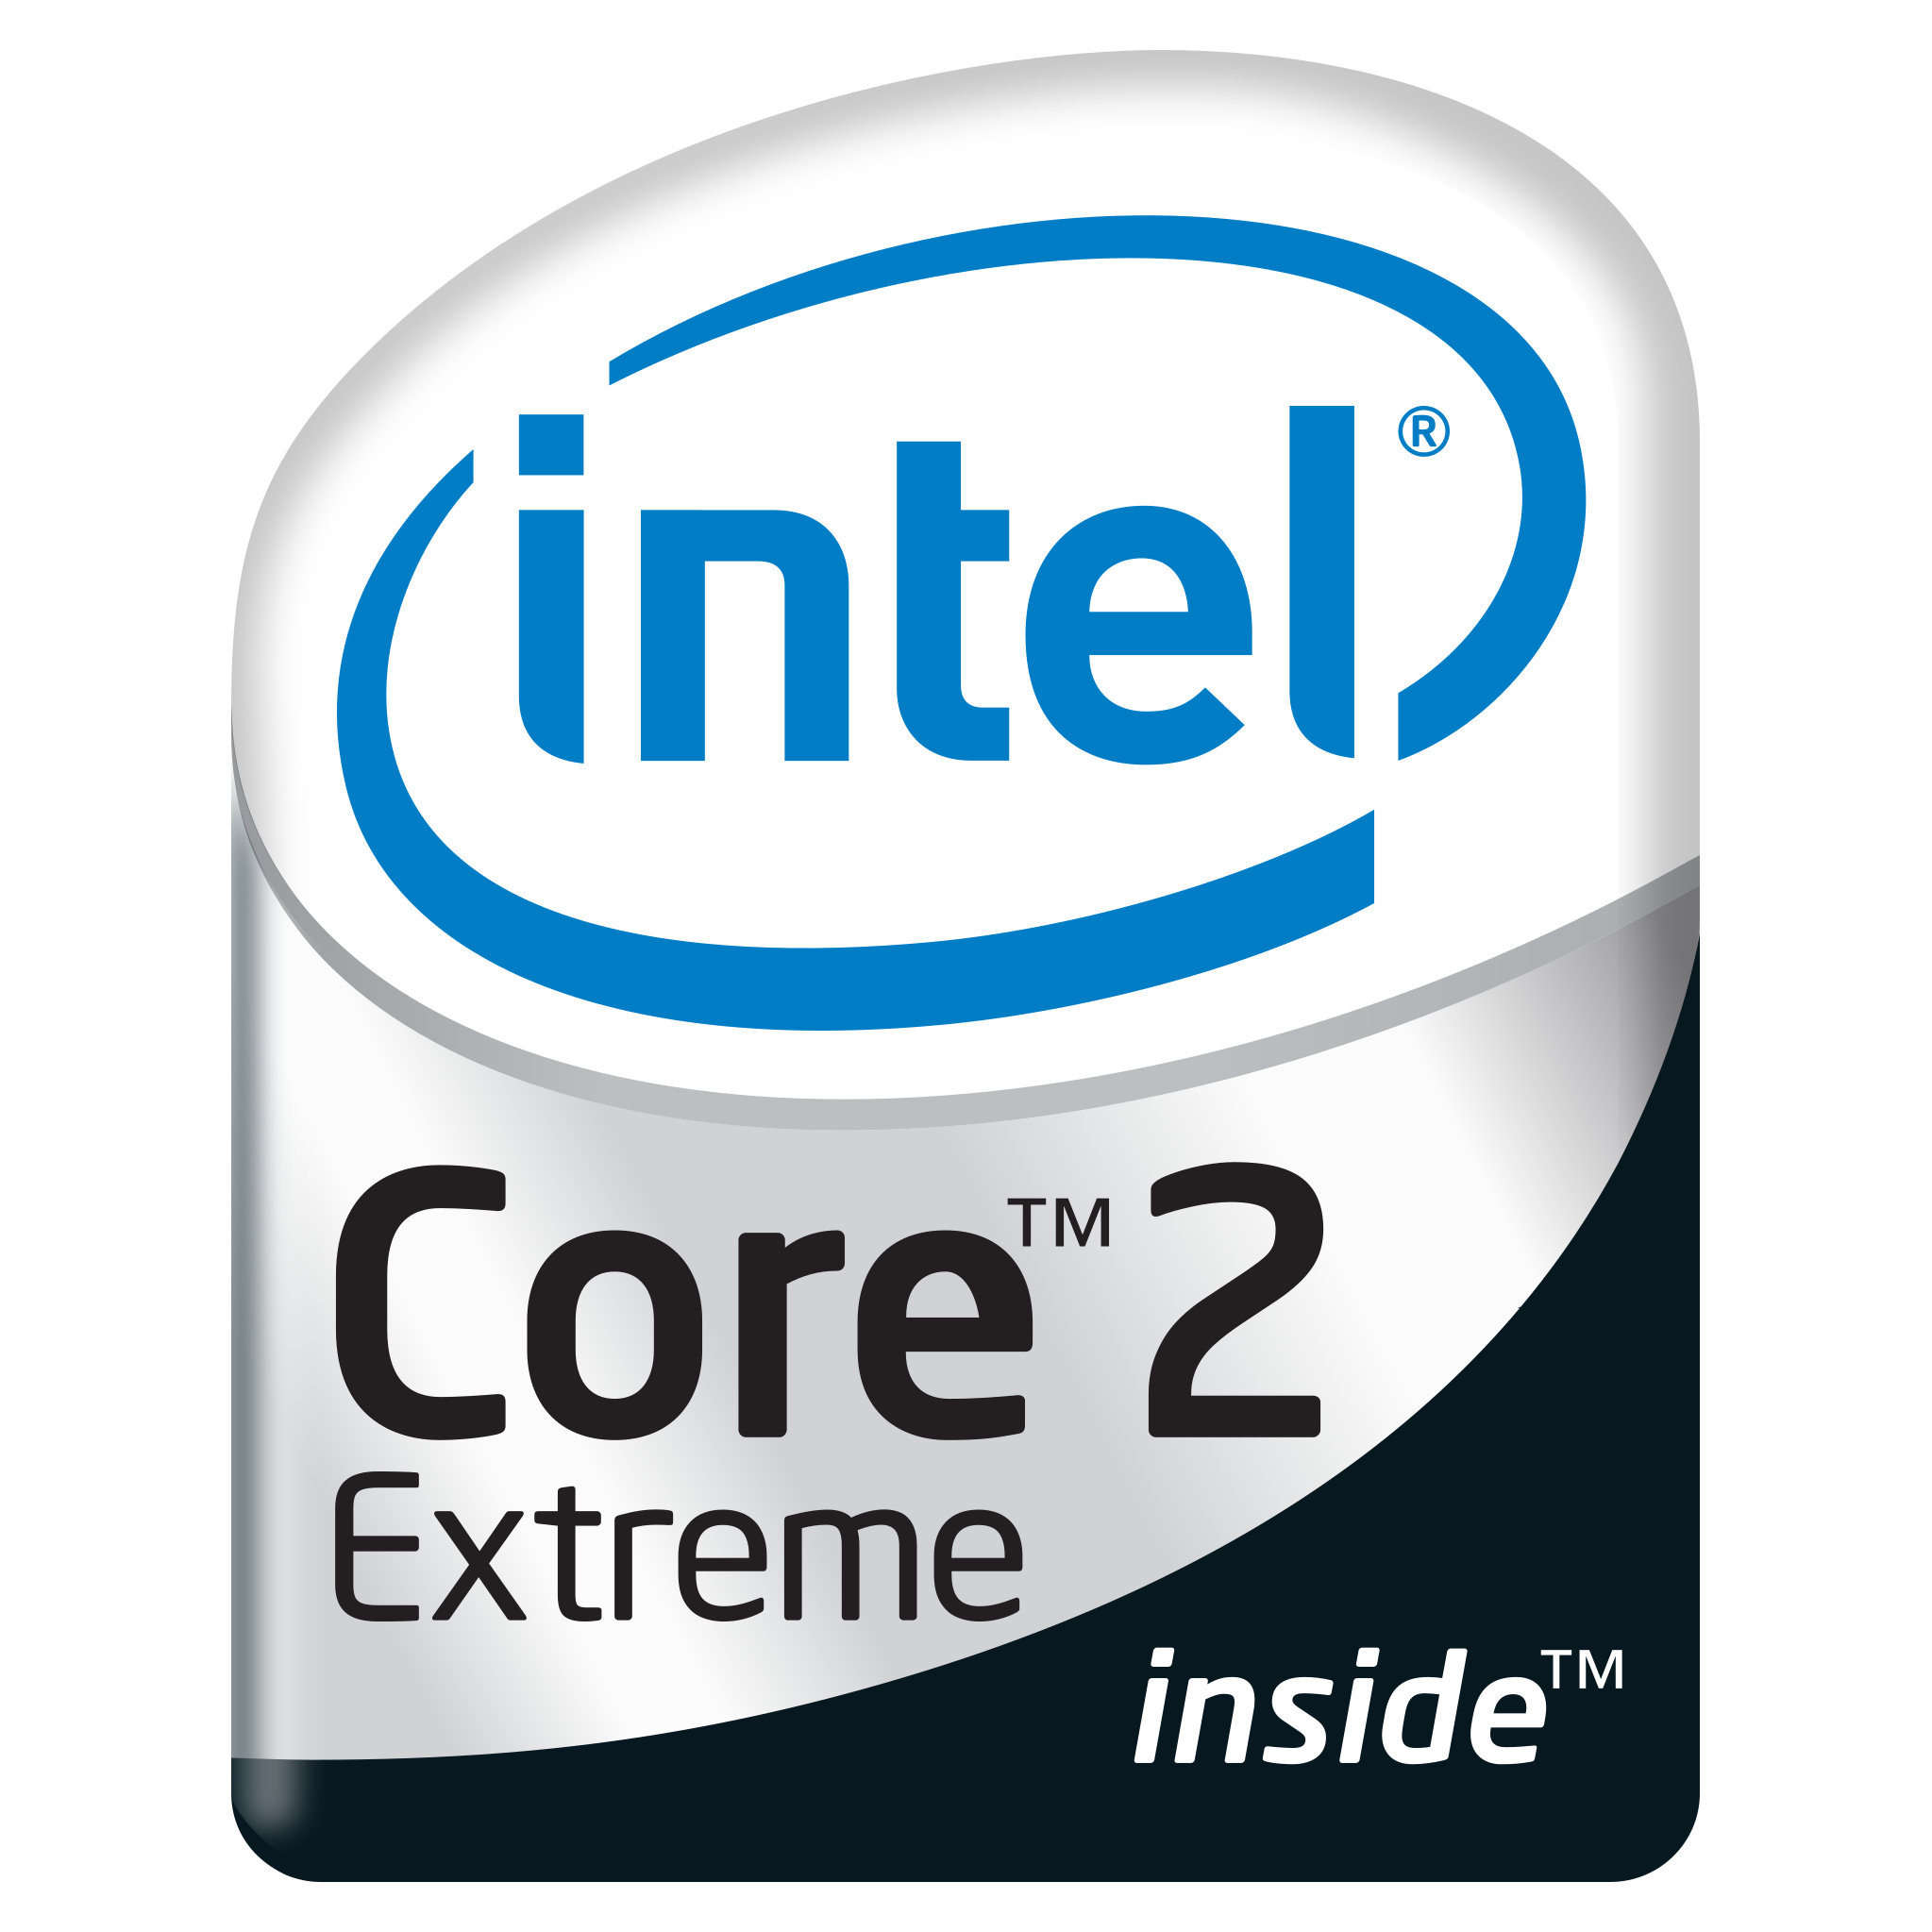 Core2 Extreme logo